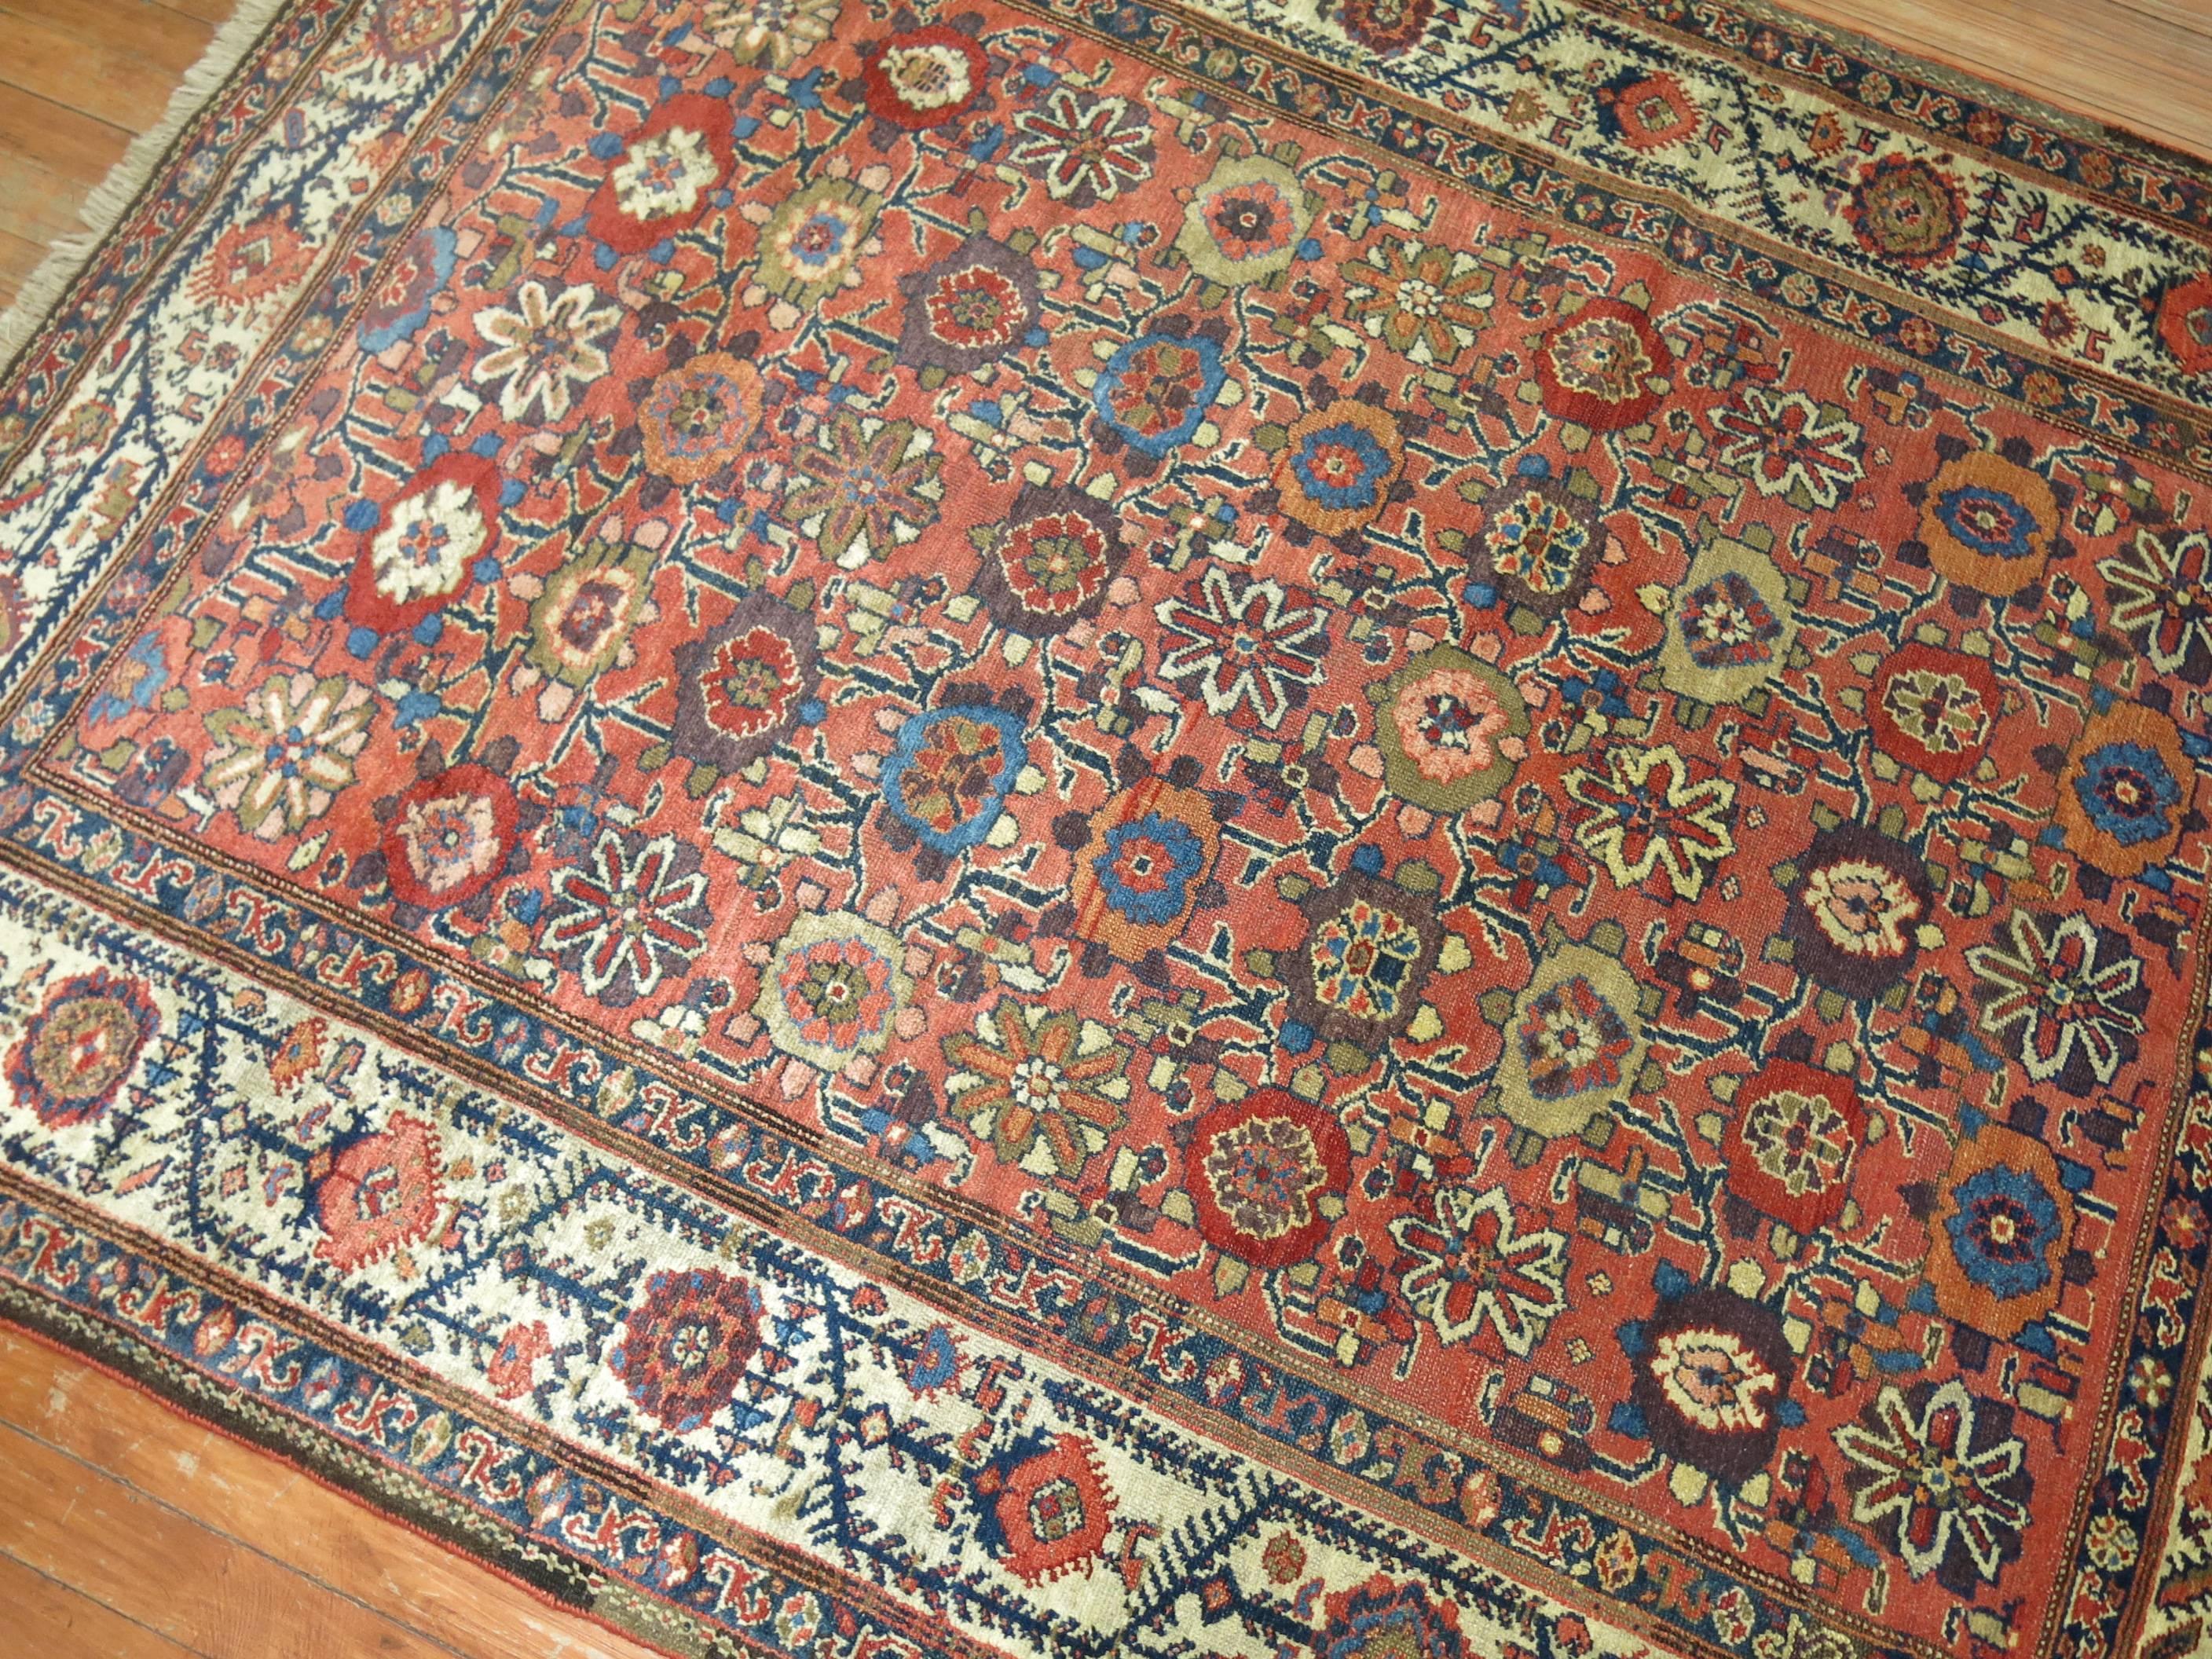 Decorative early 20th century Persian Malayer rug sporting an infamous mini khani pattern

4'10'' x 6'